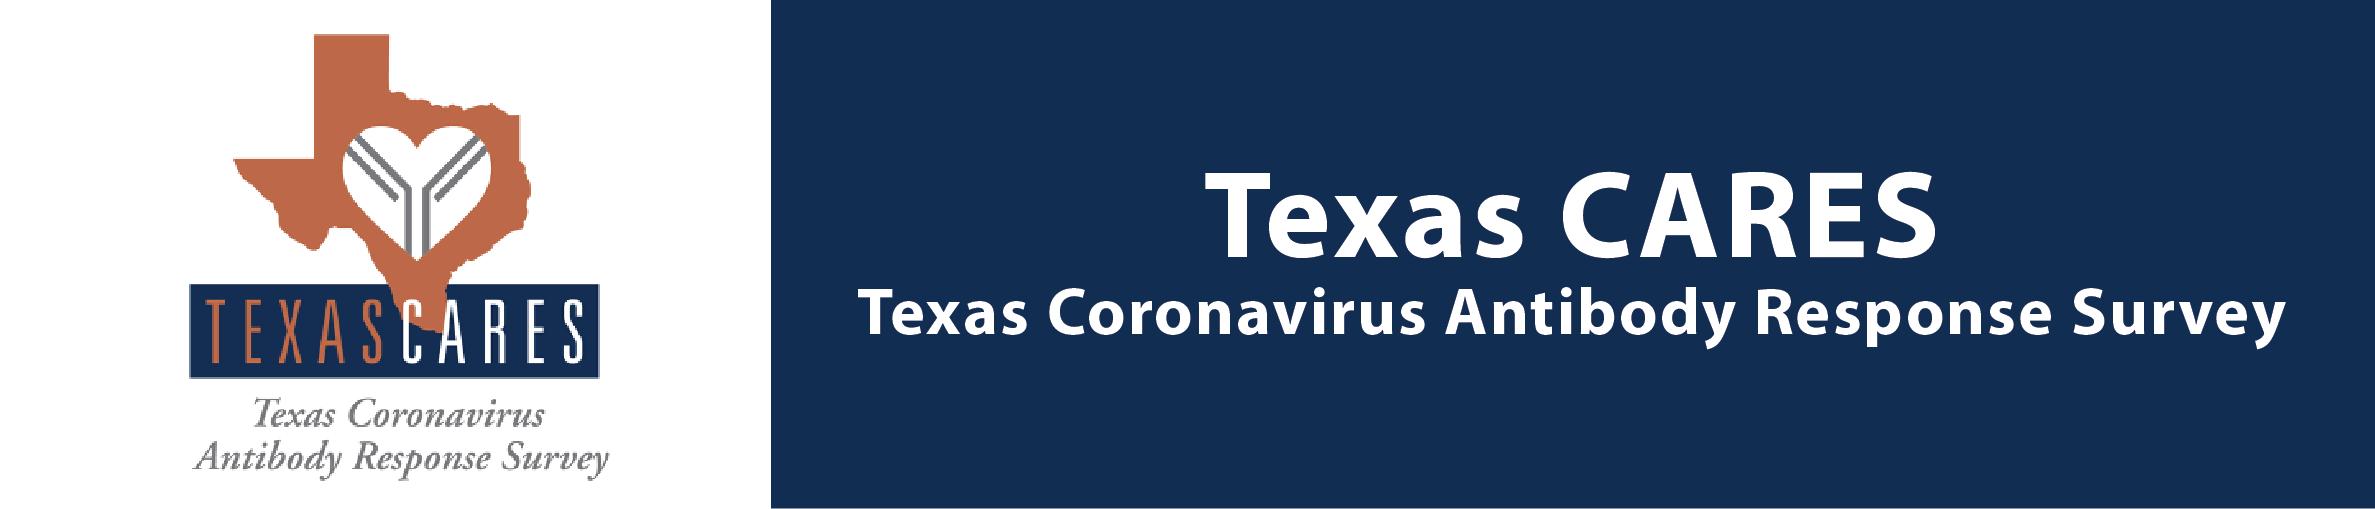 Banner image for Texas Coronavirus Antibody Response Survey (TX CARES)